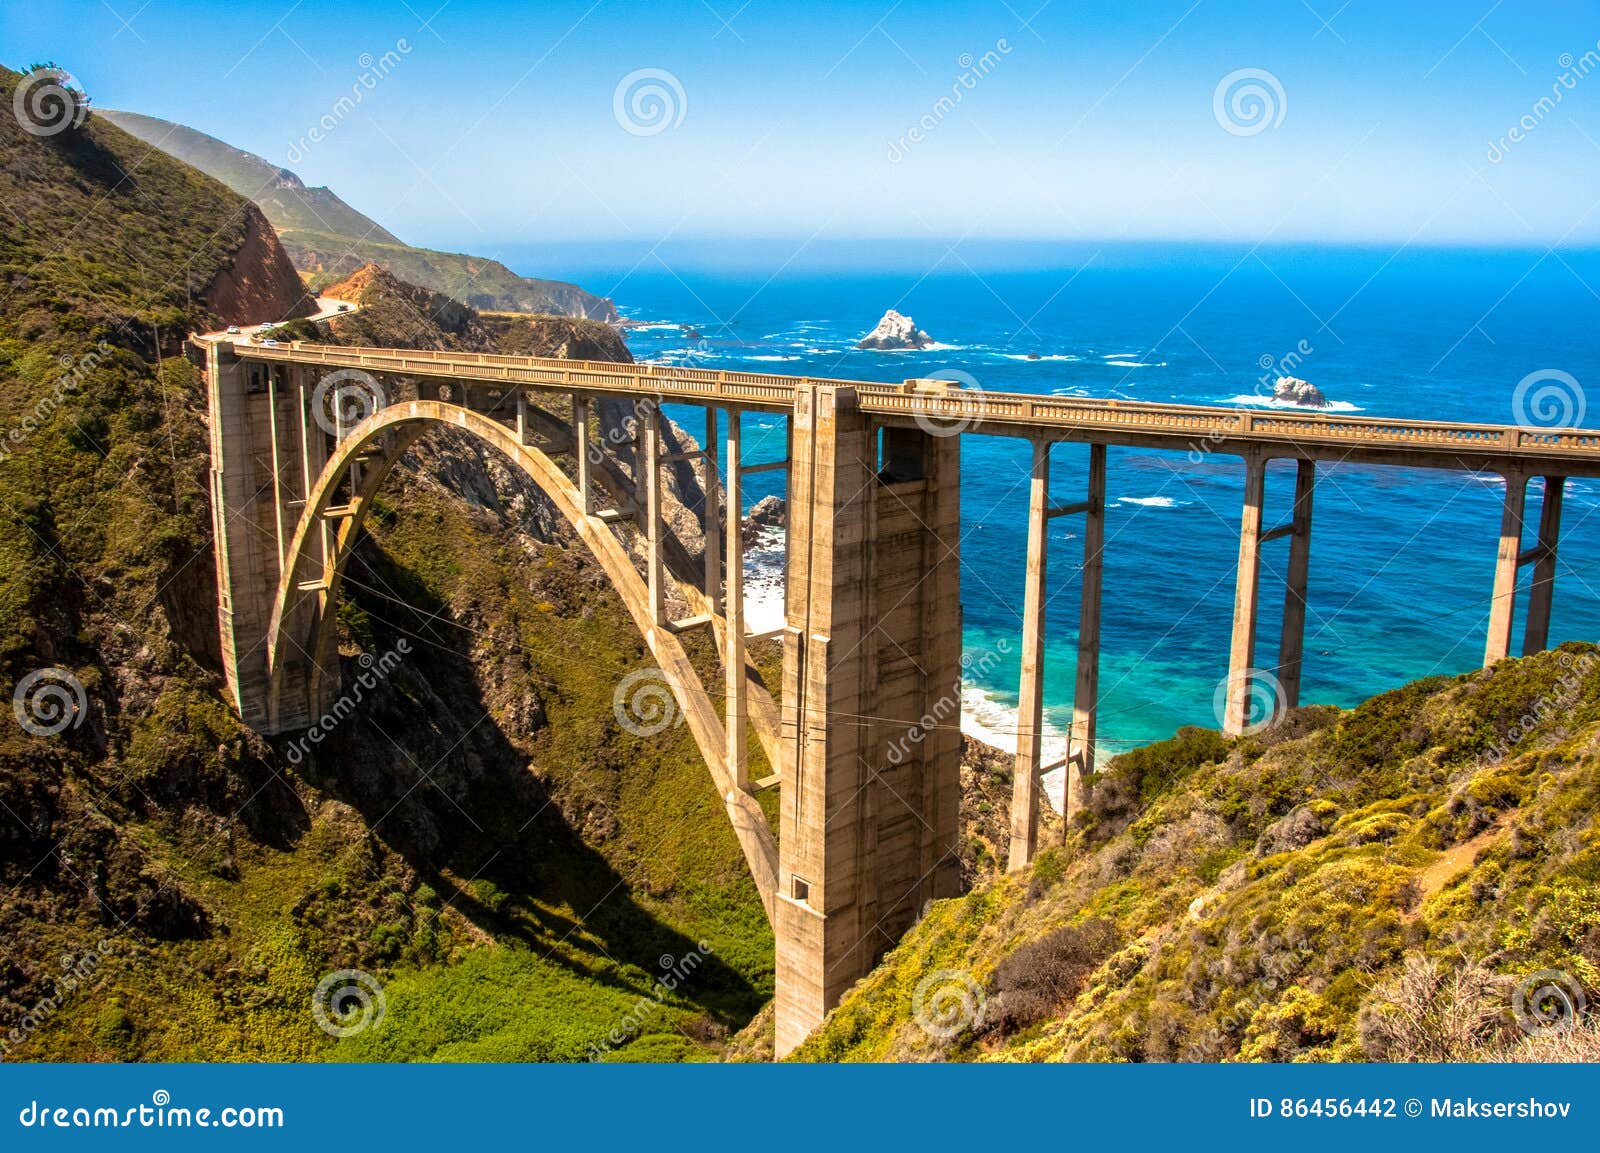 bixby bridge, highway 1 big sur - california usa